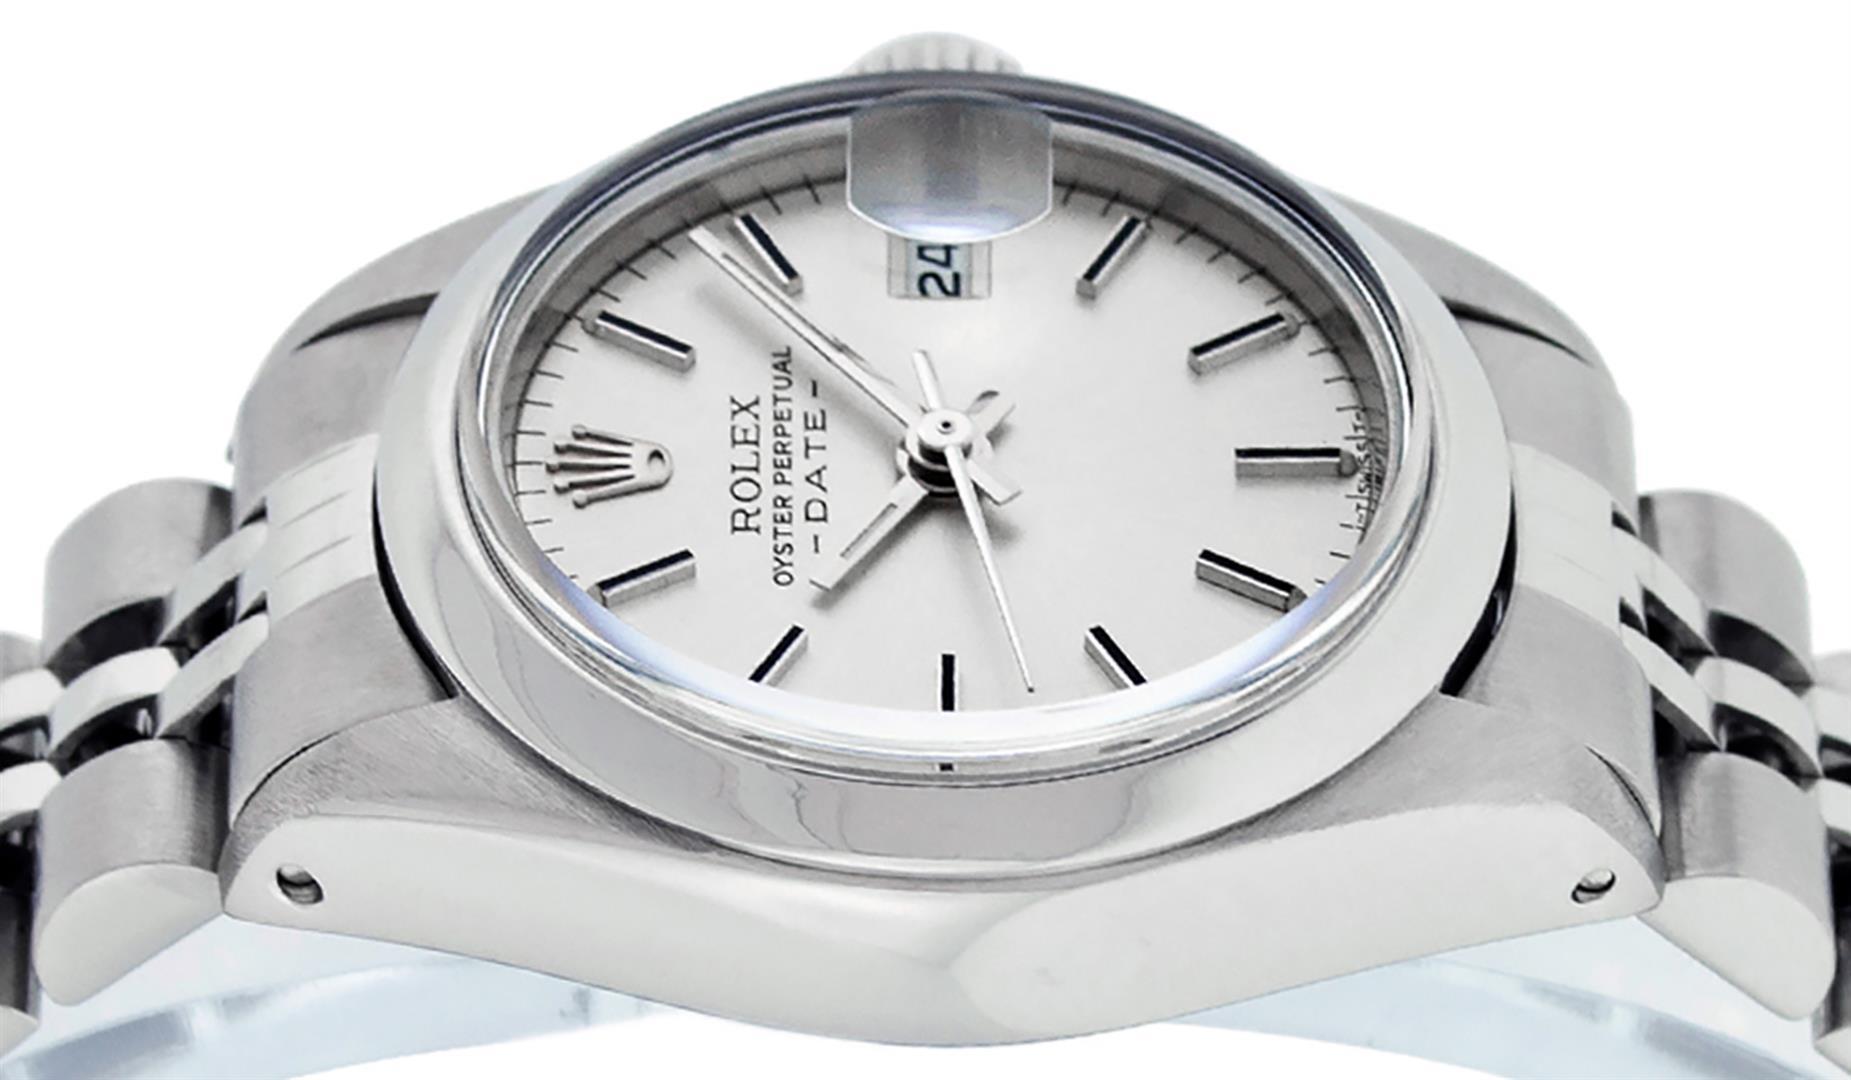 Rolex Ladies Stainless Steel Silver Index 26MM Fluted Wristwatch